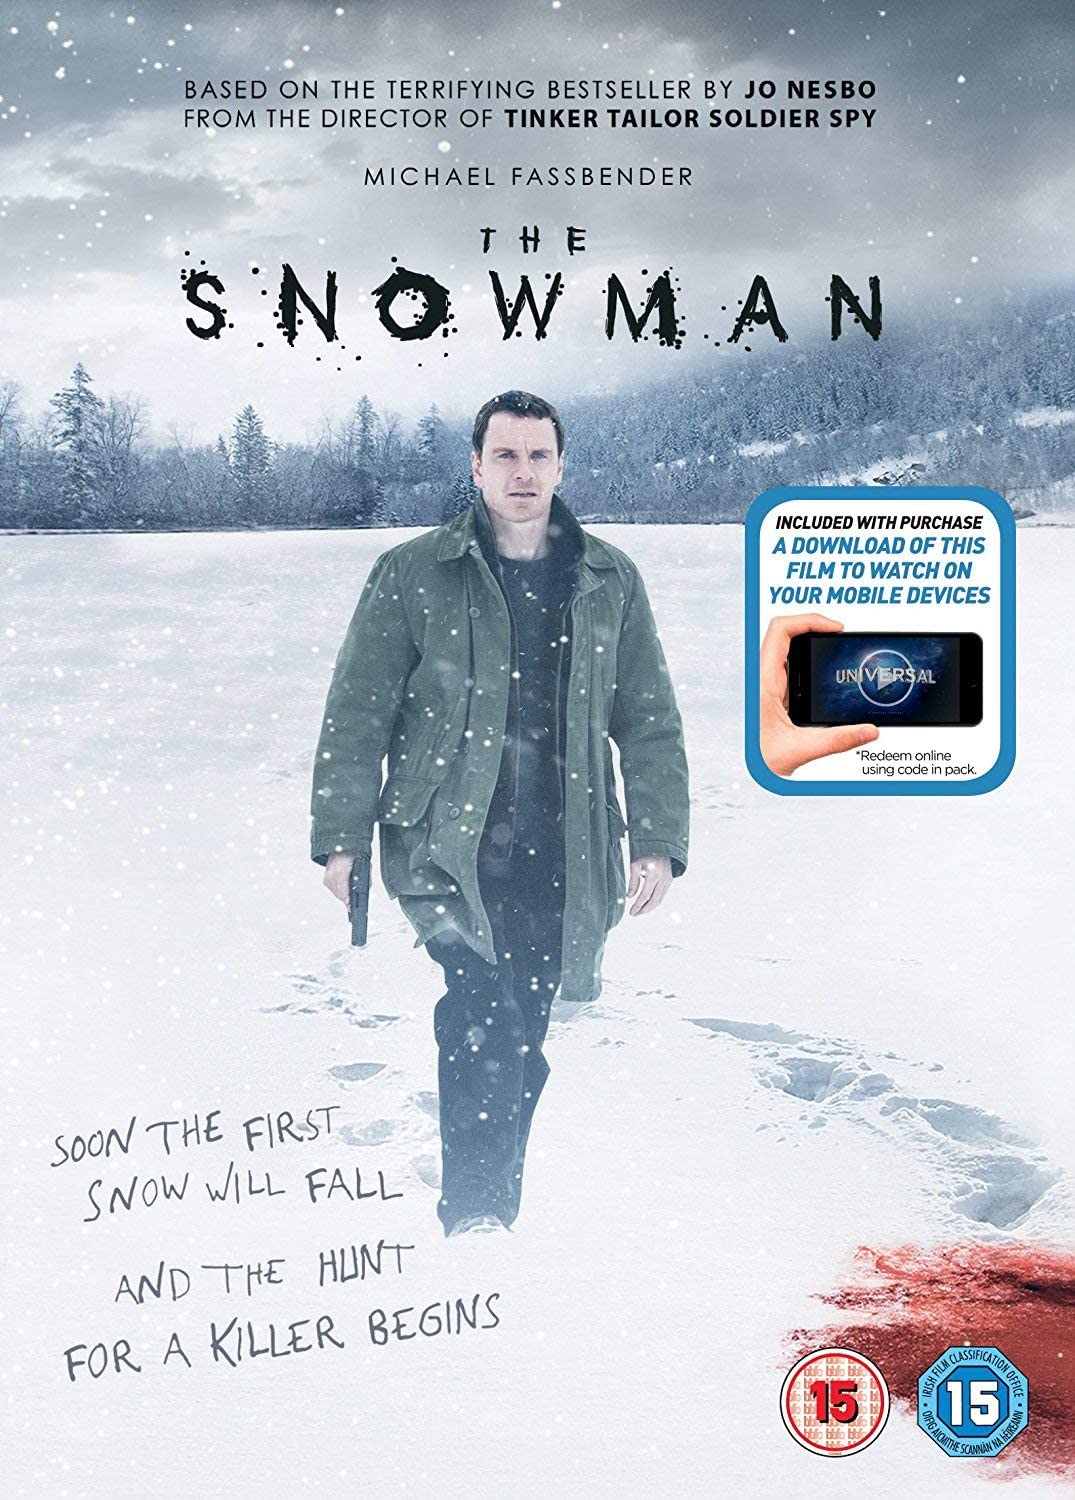 The Snowman - Mystery/Crime [DVD]